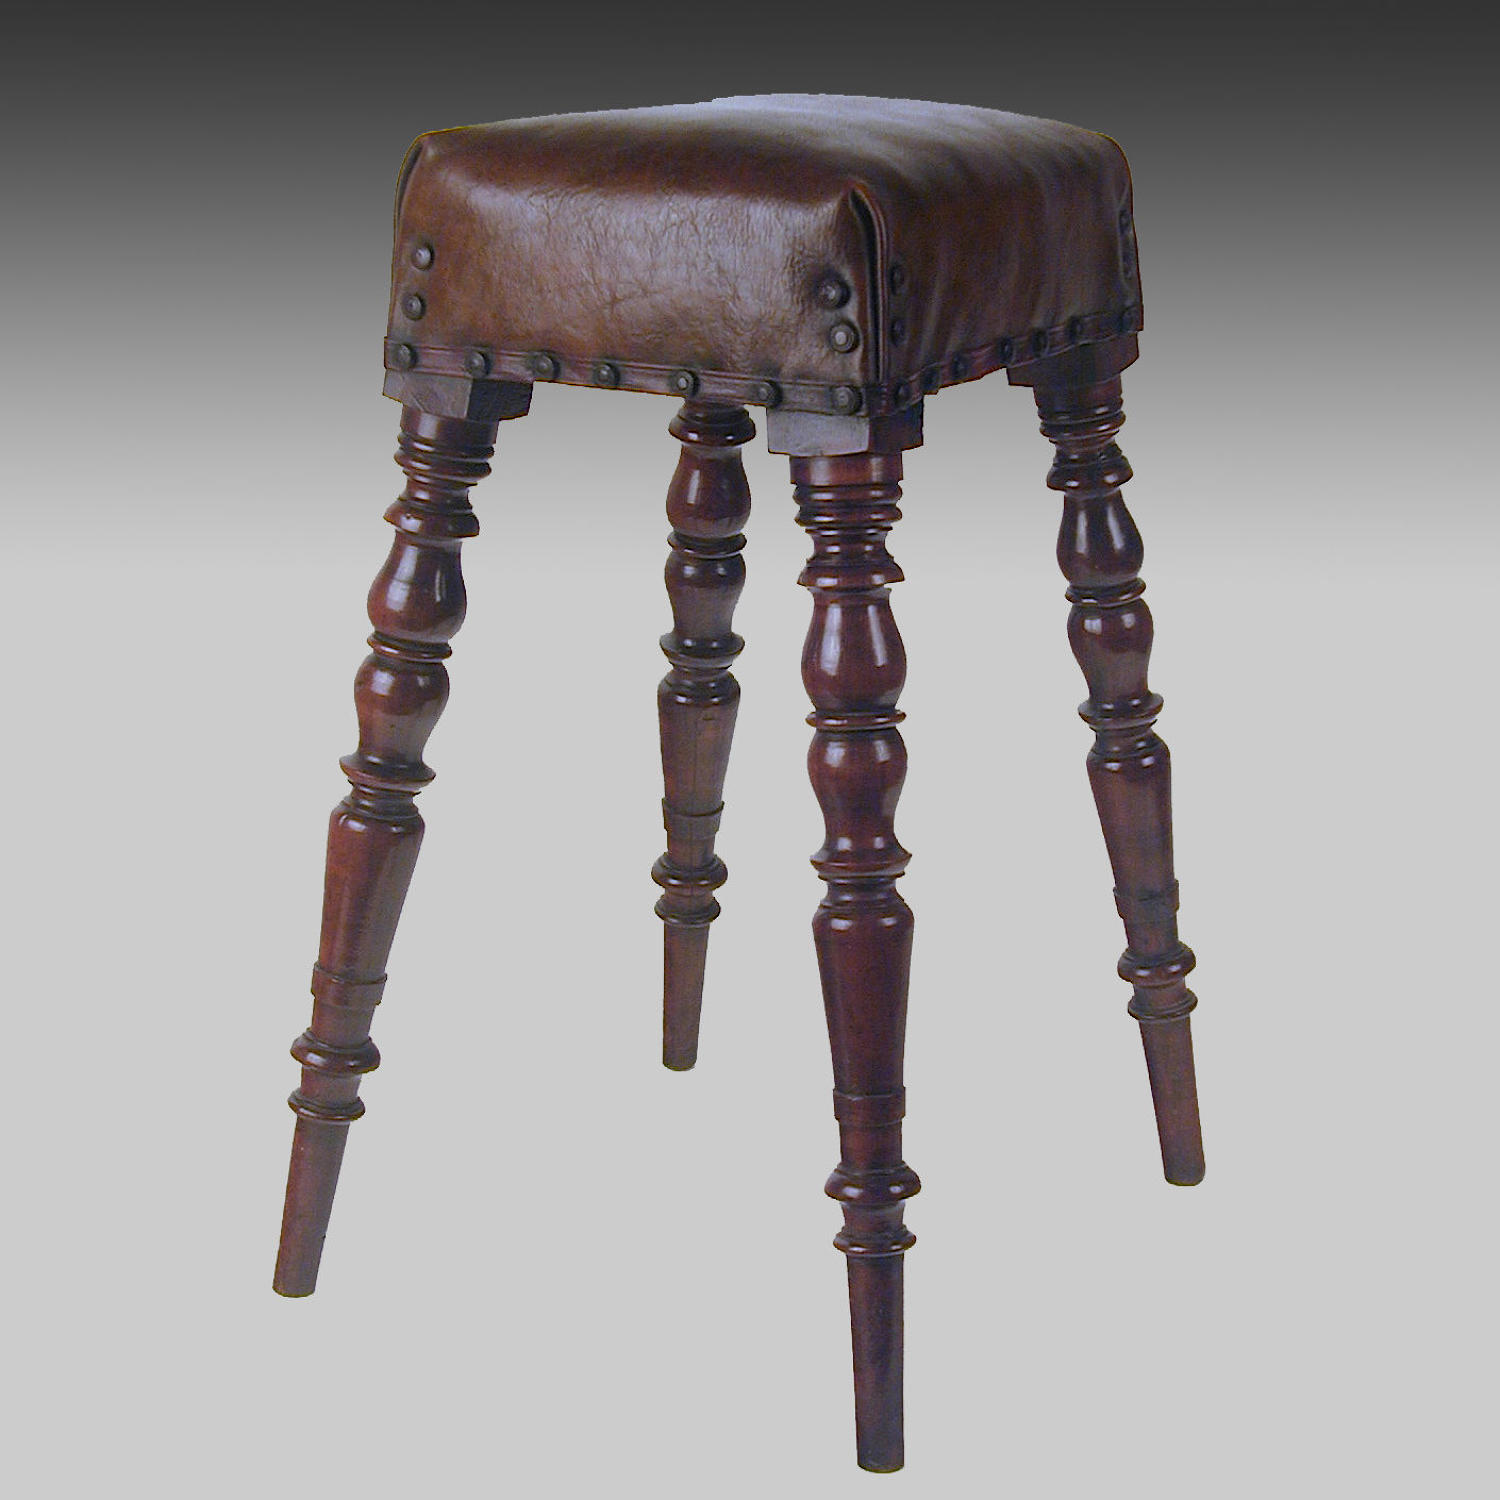 Antique 19th century yew wood high stool